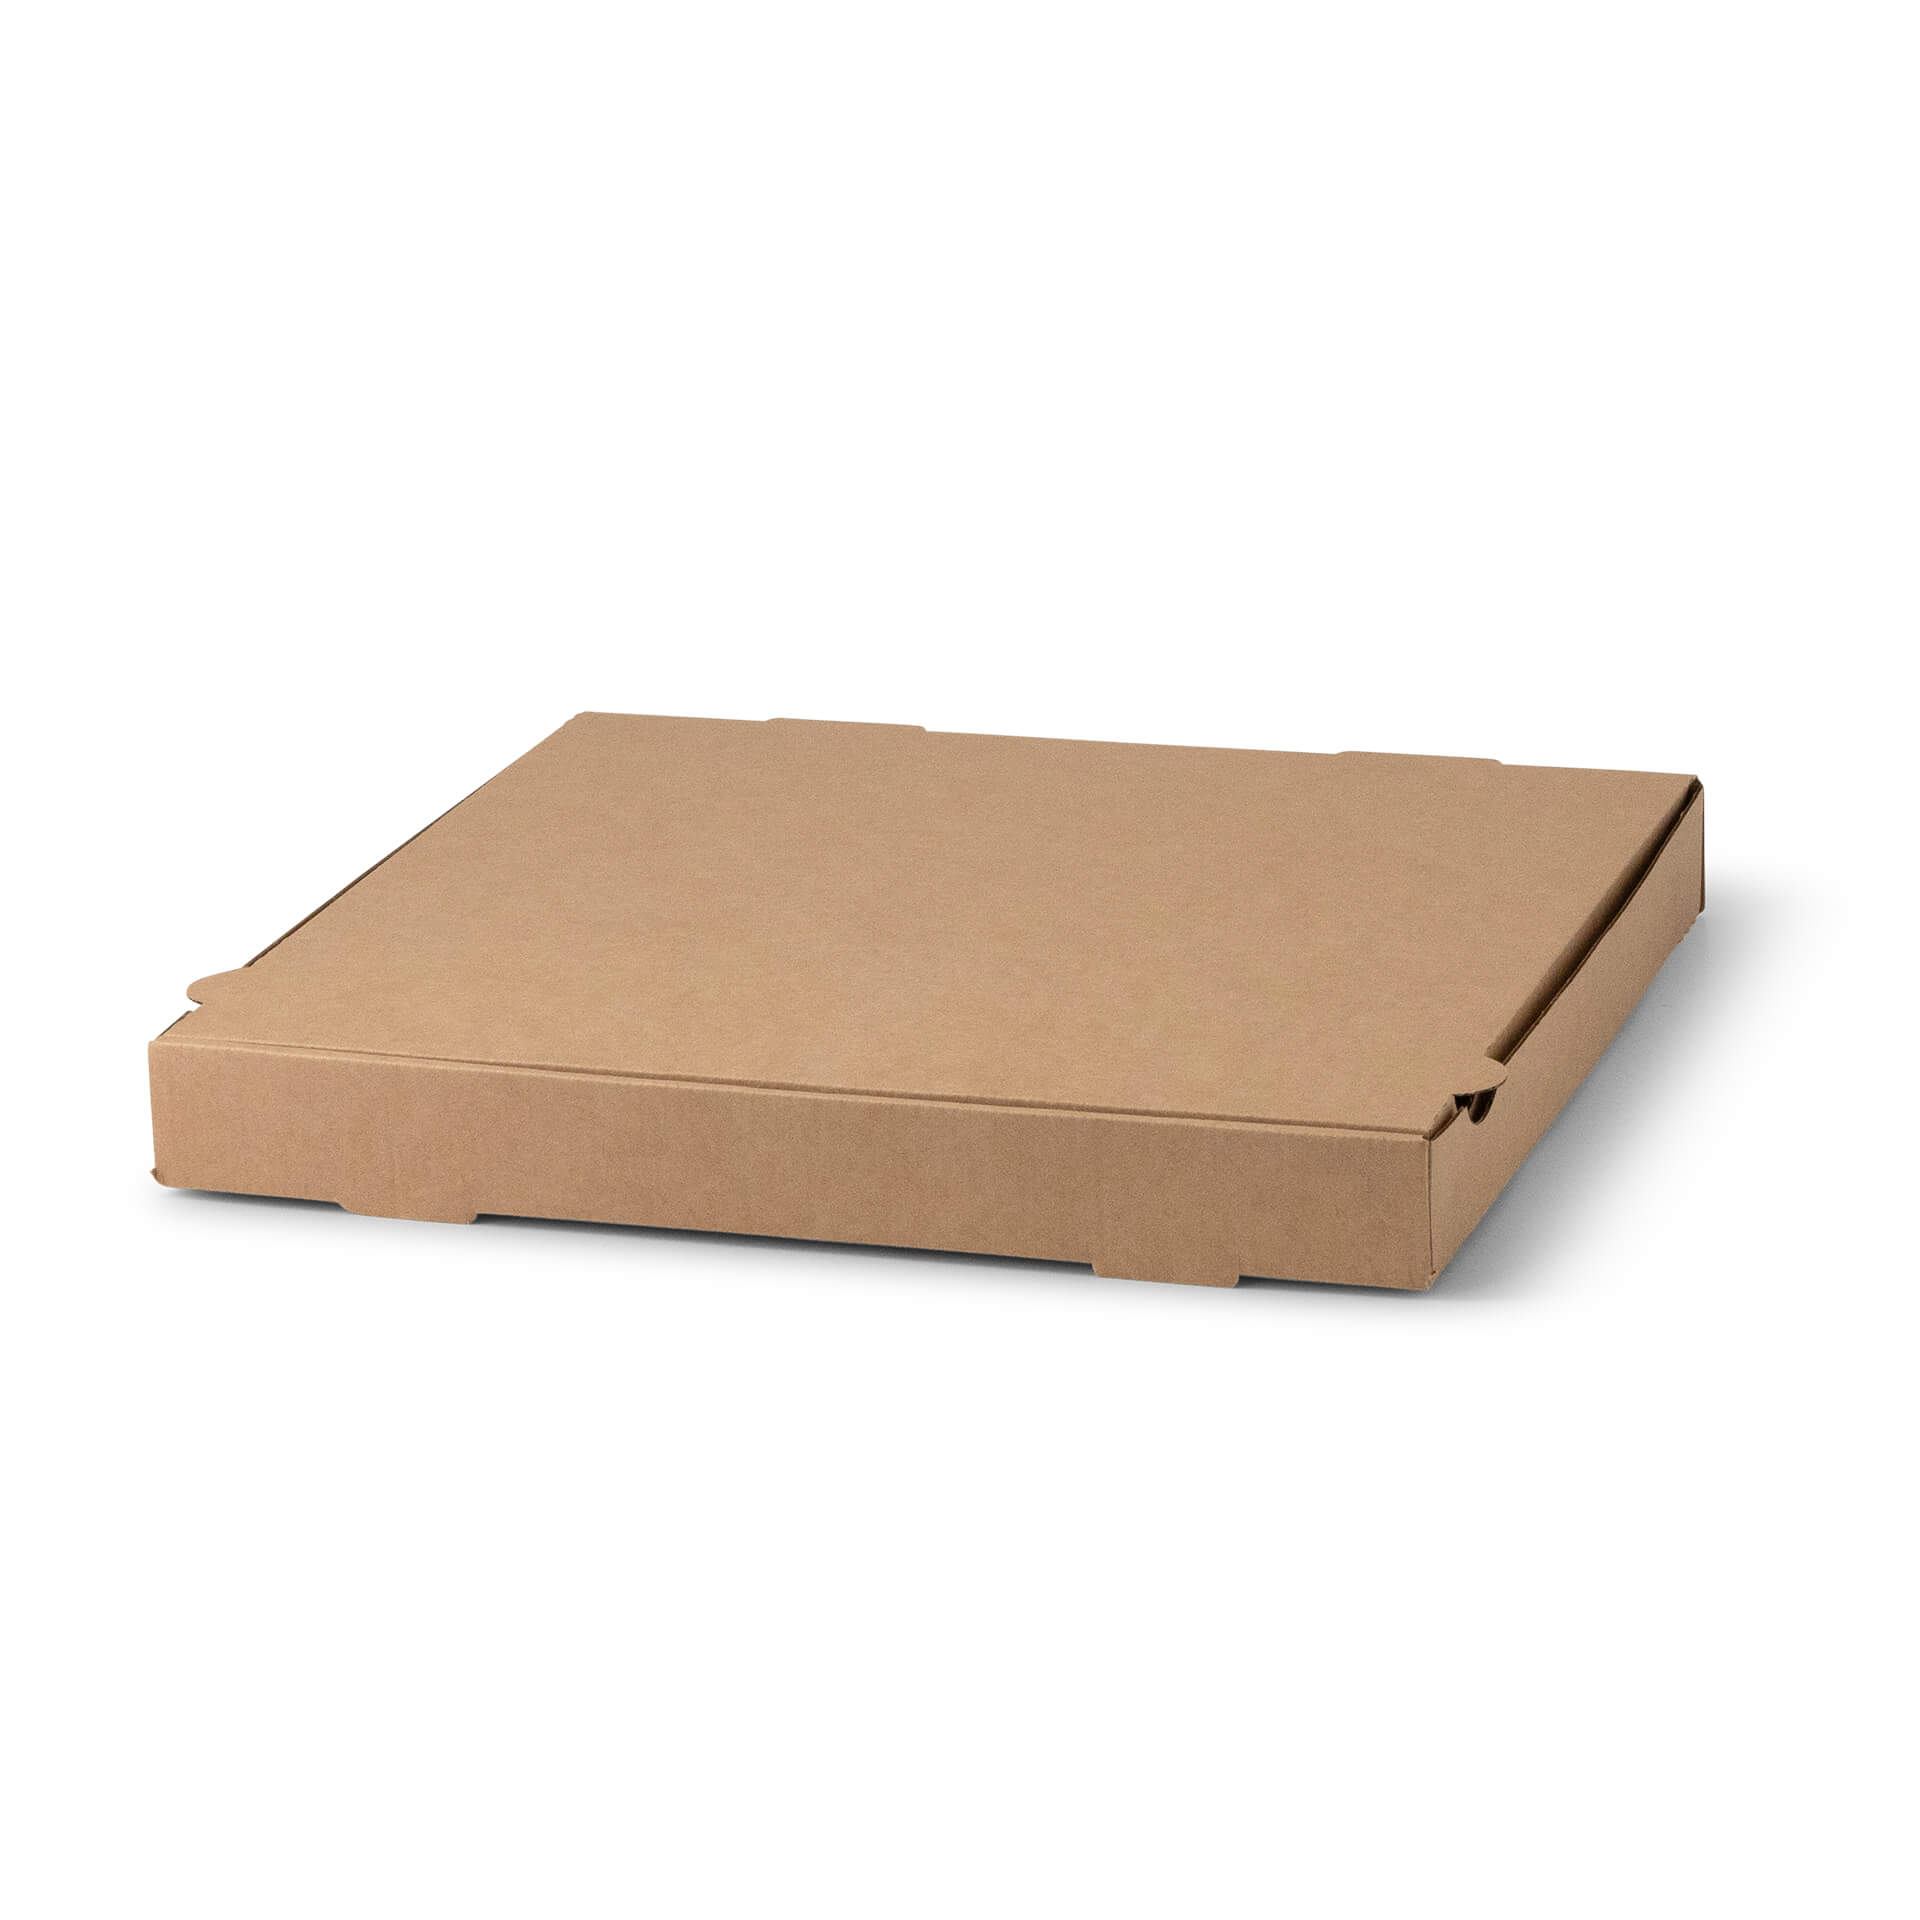 Pizzakartons Ø 35 cm, braun